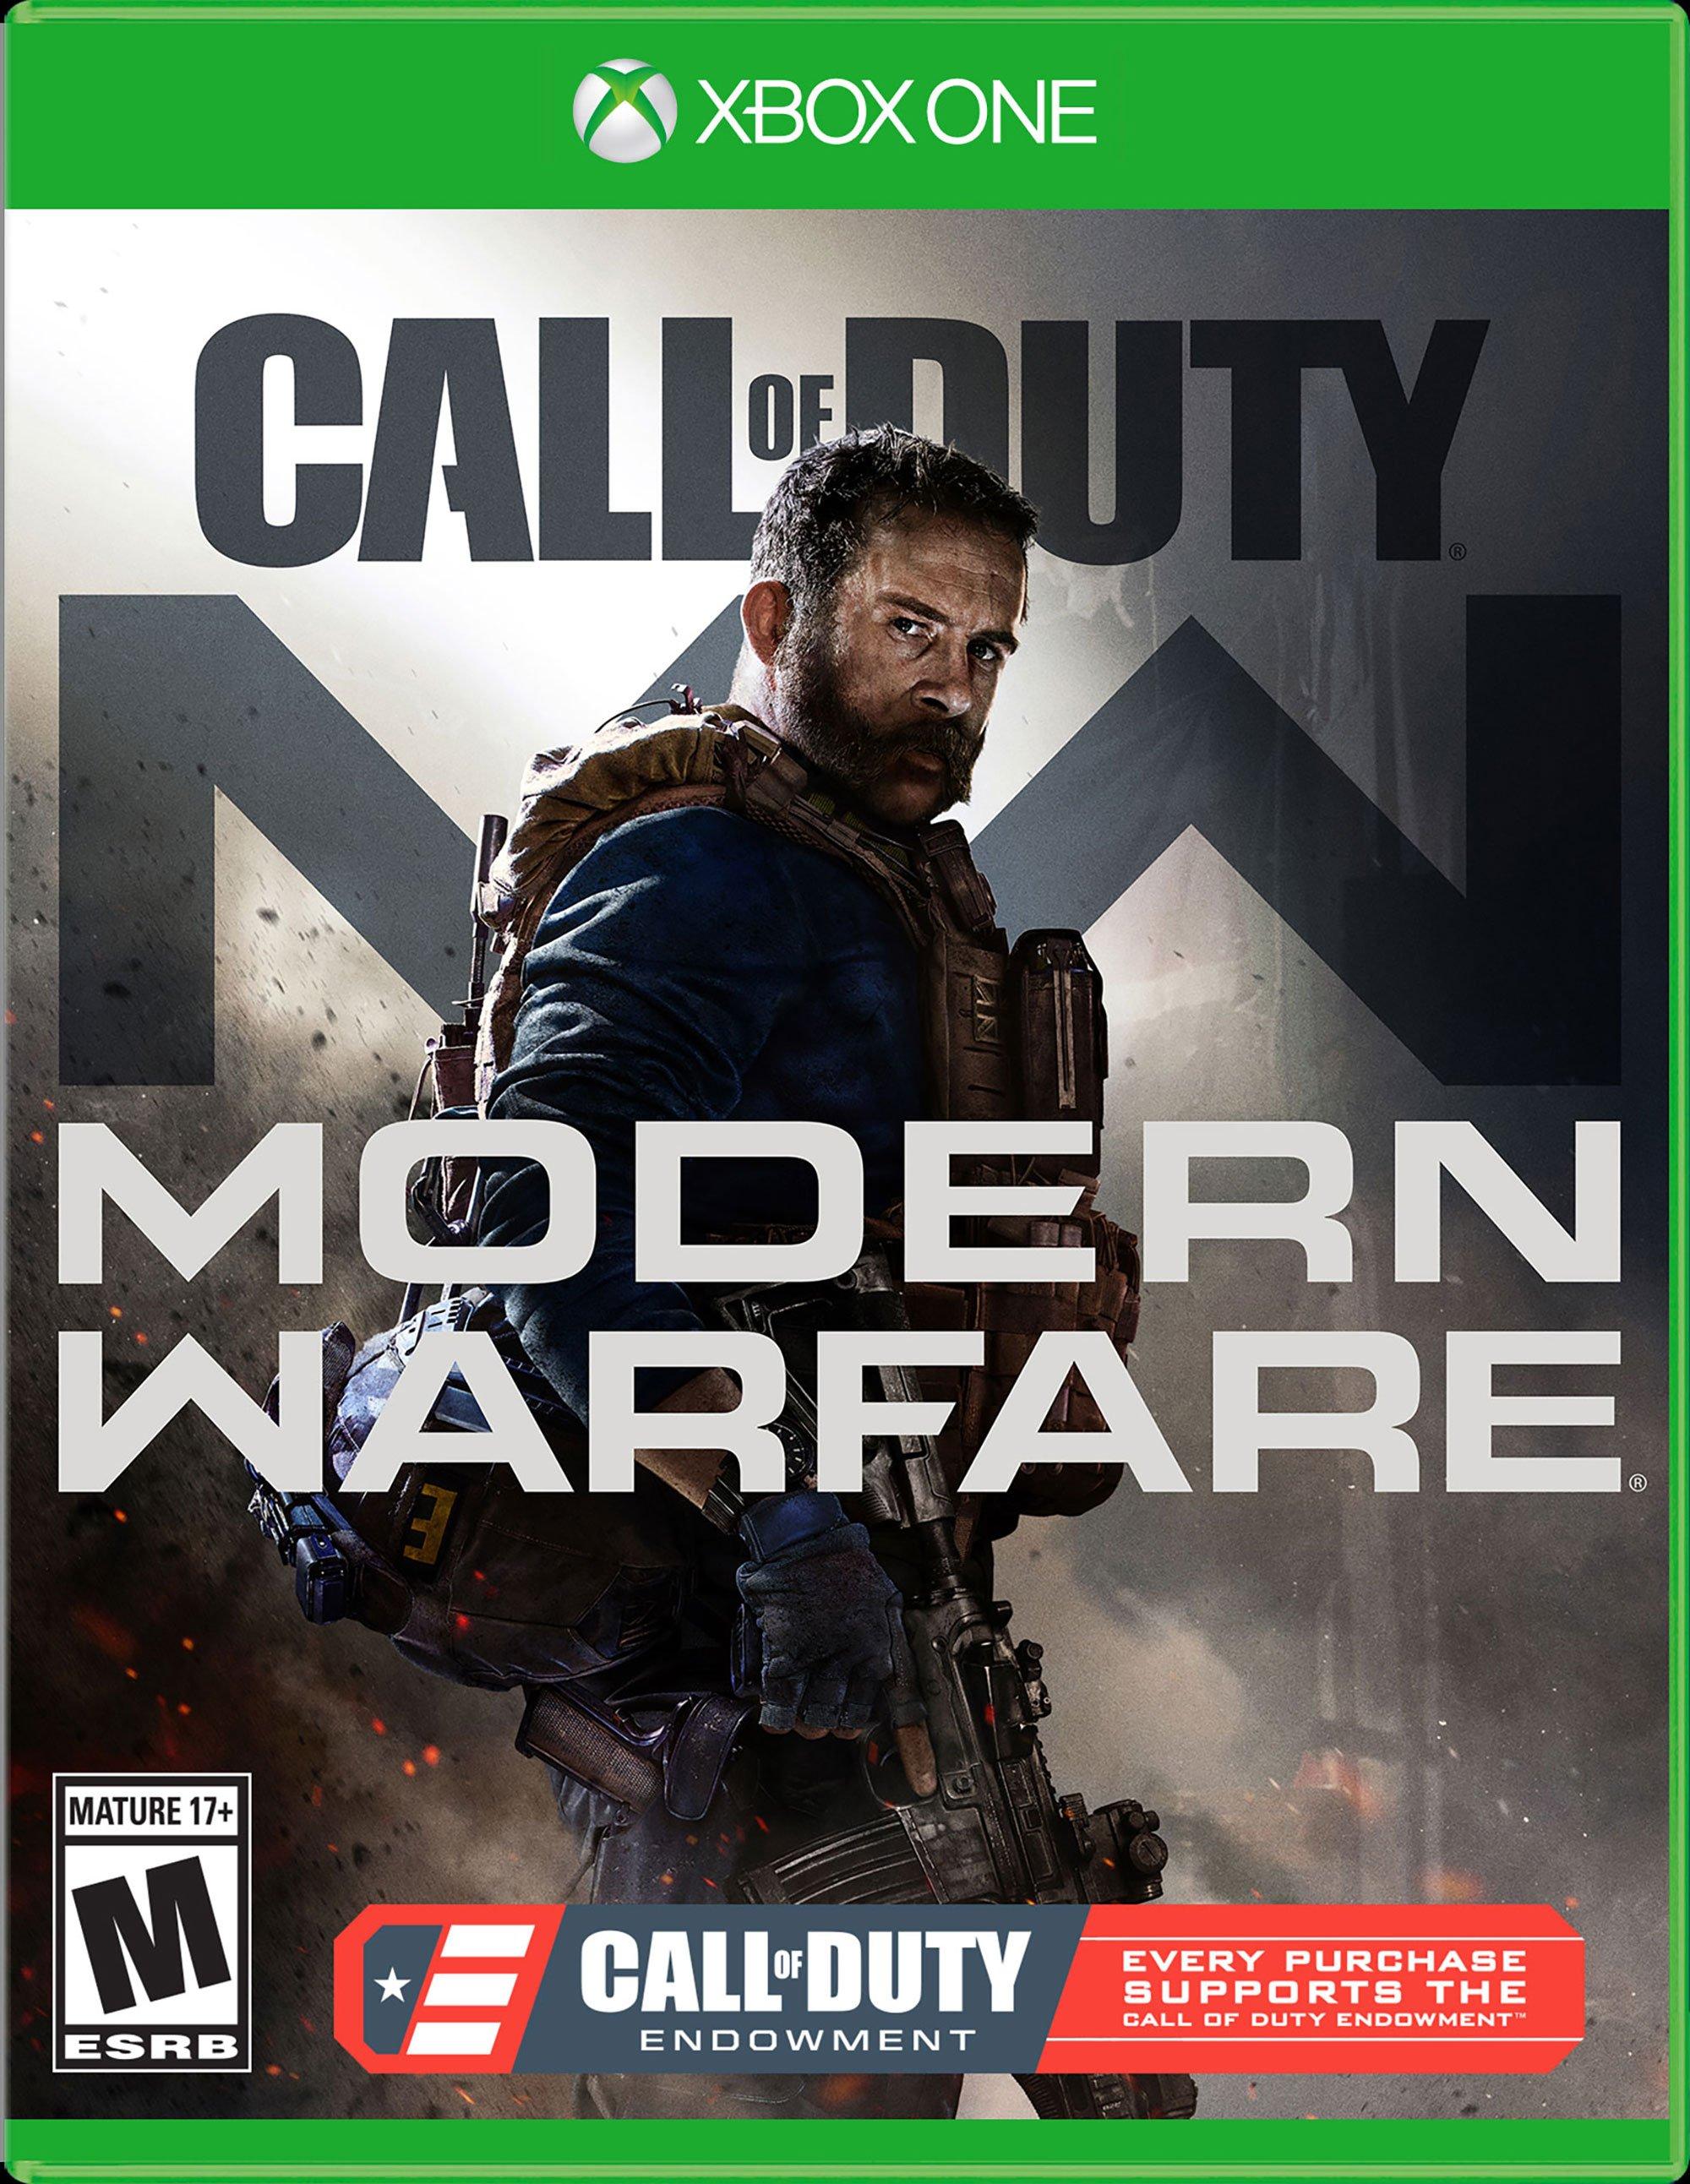 Call Of Duty Modern Warfare Xbox One Gamestop